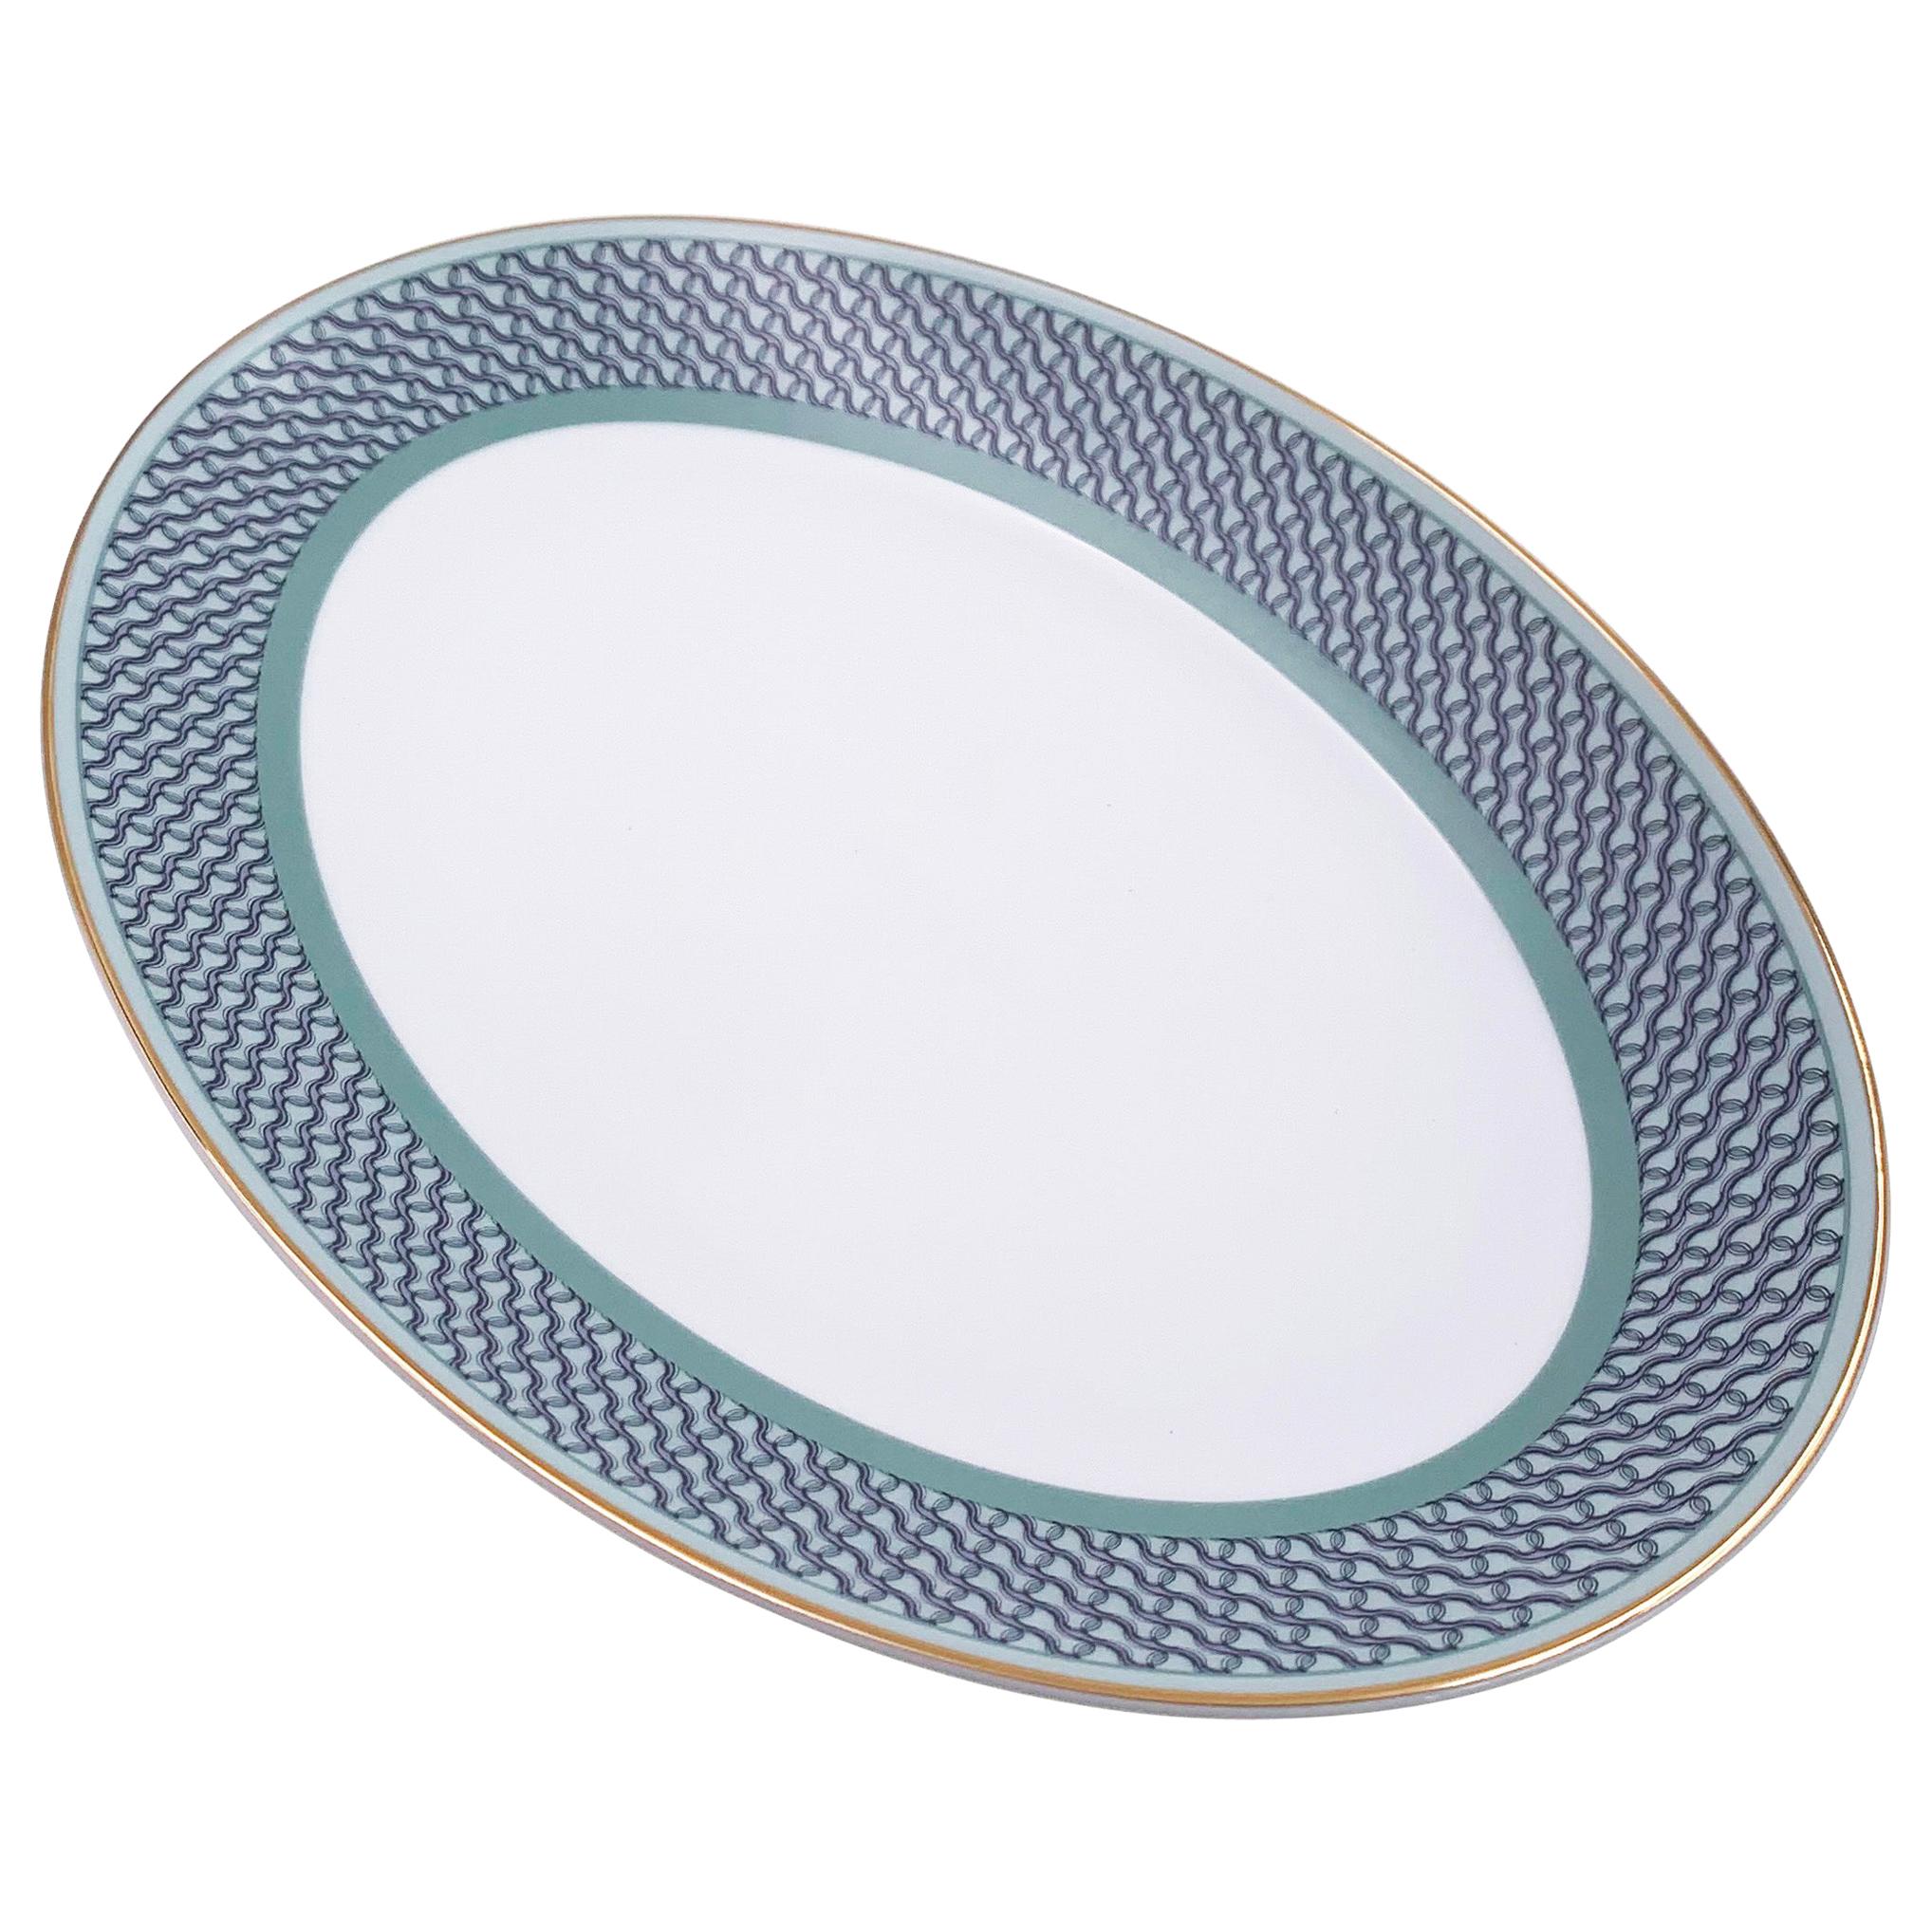 Medium Oval Serving Plate Mid Century Rhythm André Fu Living Tableware New